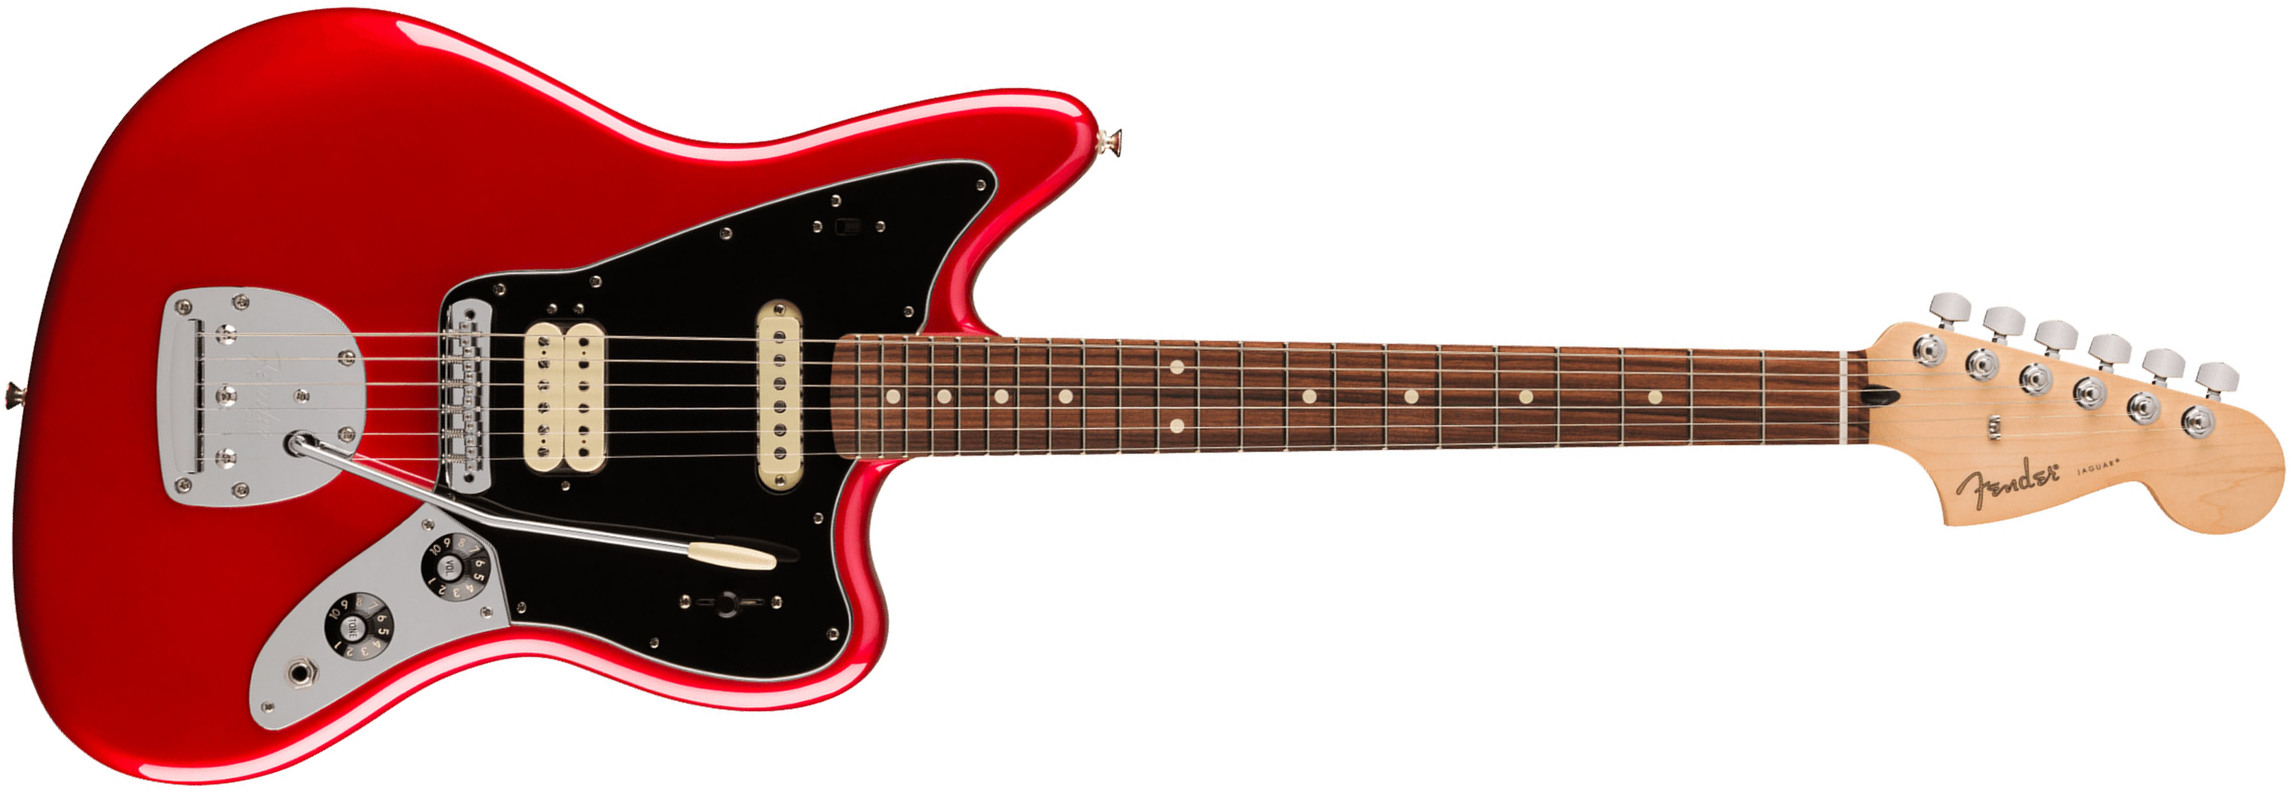 Fender Jaguar Player Mex 2023 Hs Trem Pf - Candy Apple Red - Retro-rock elektrische gitaar - Main picture